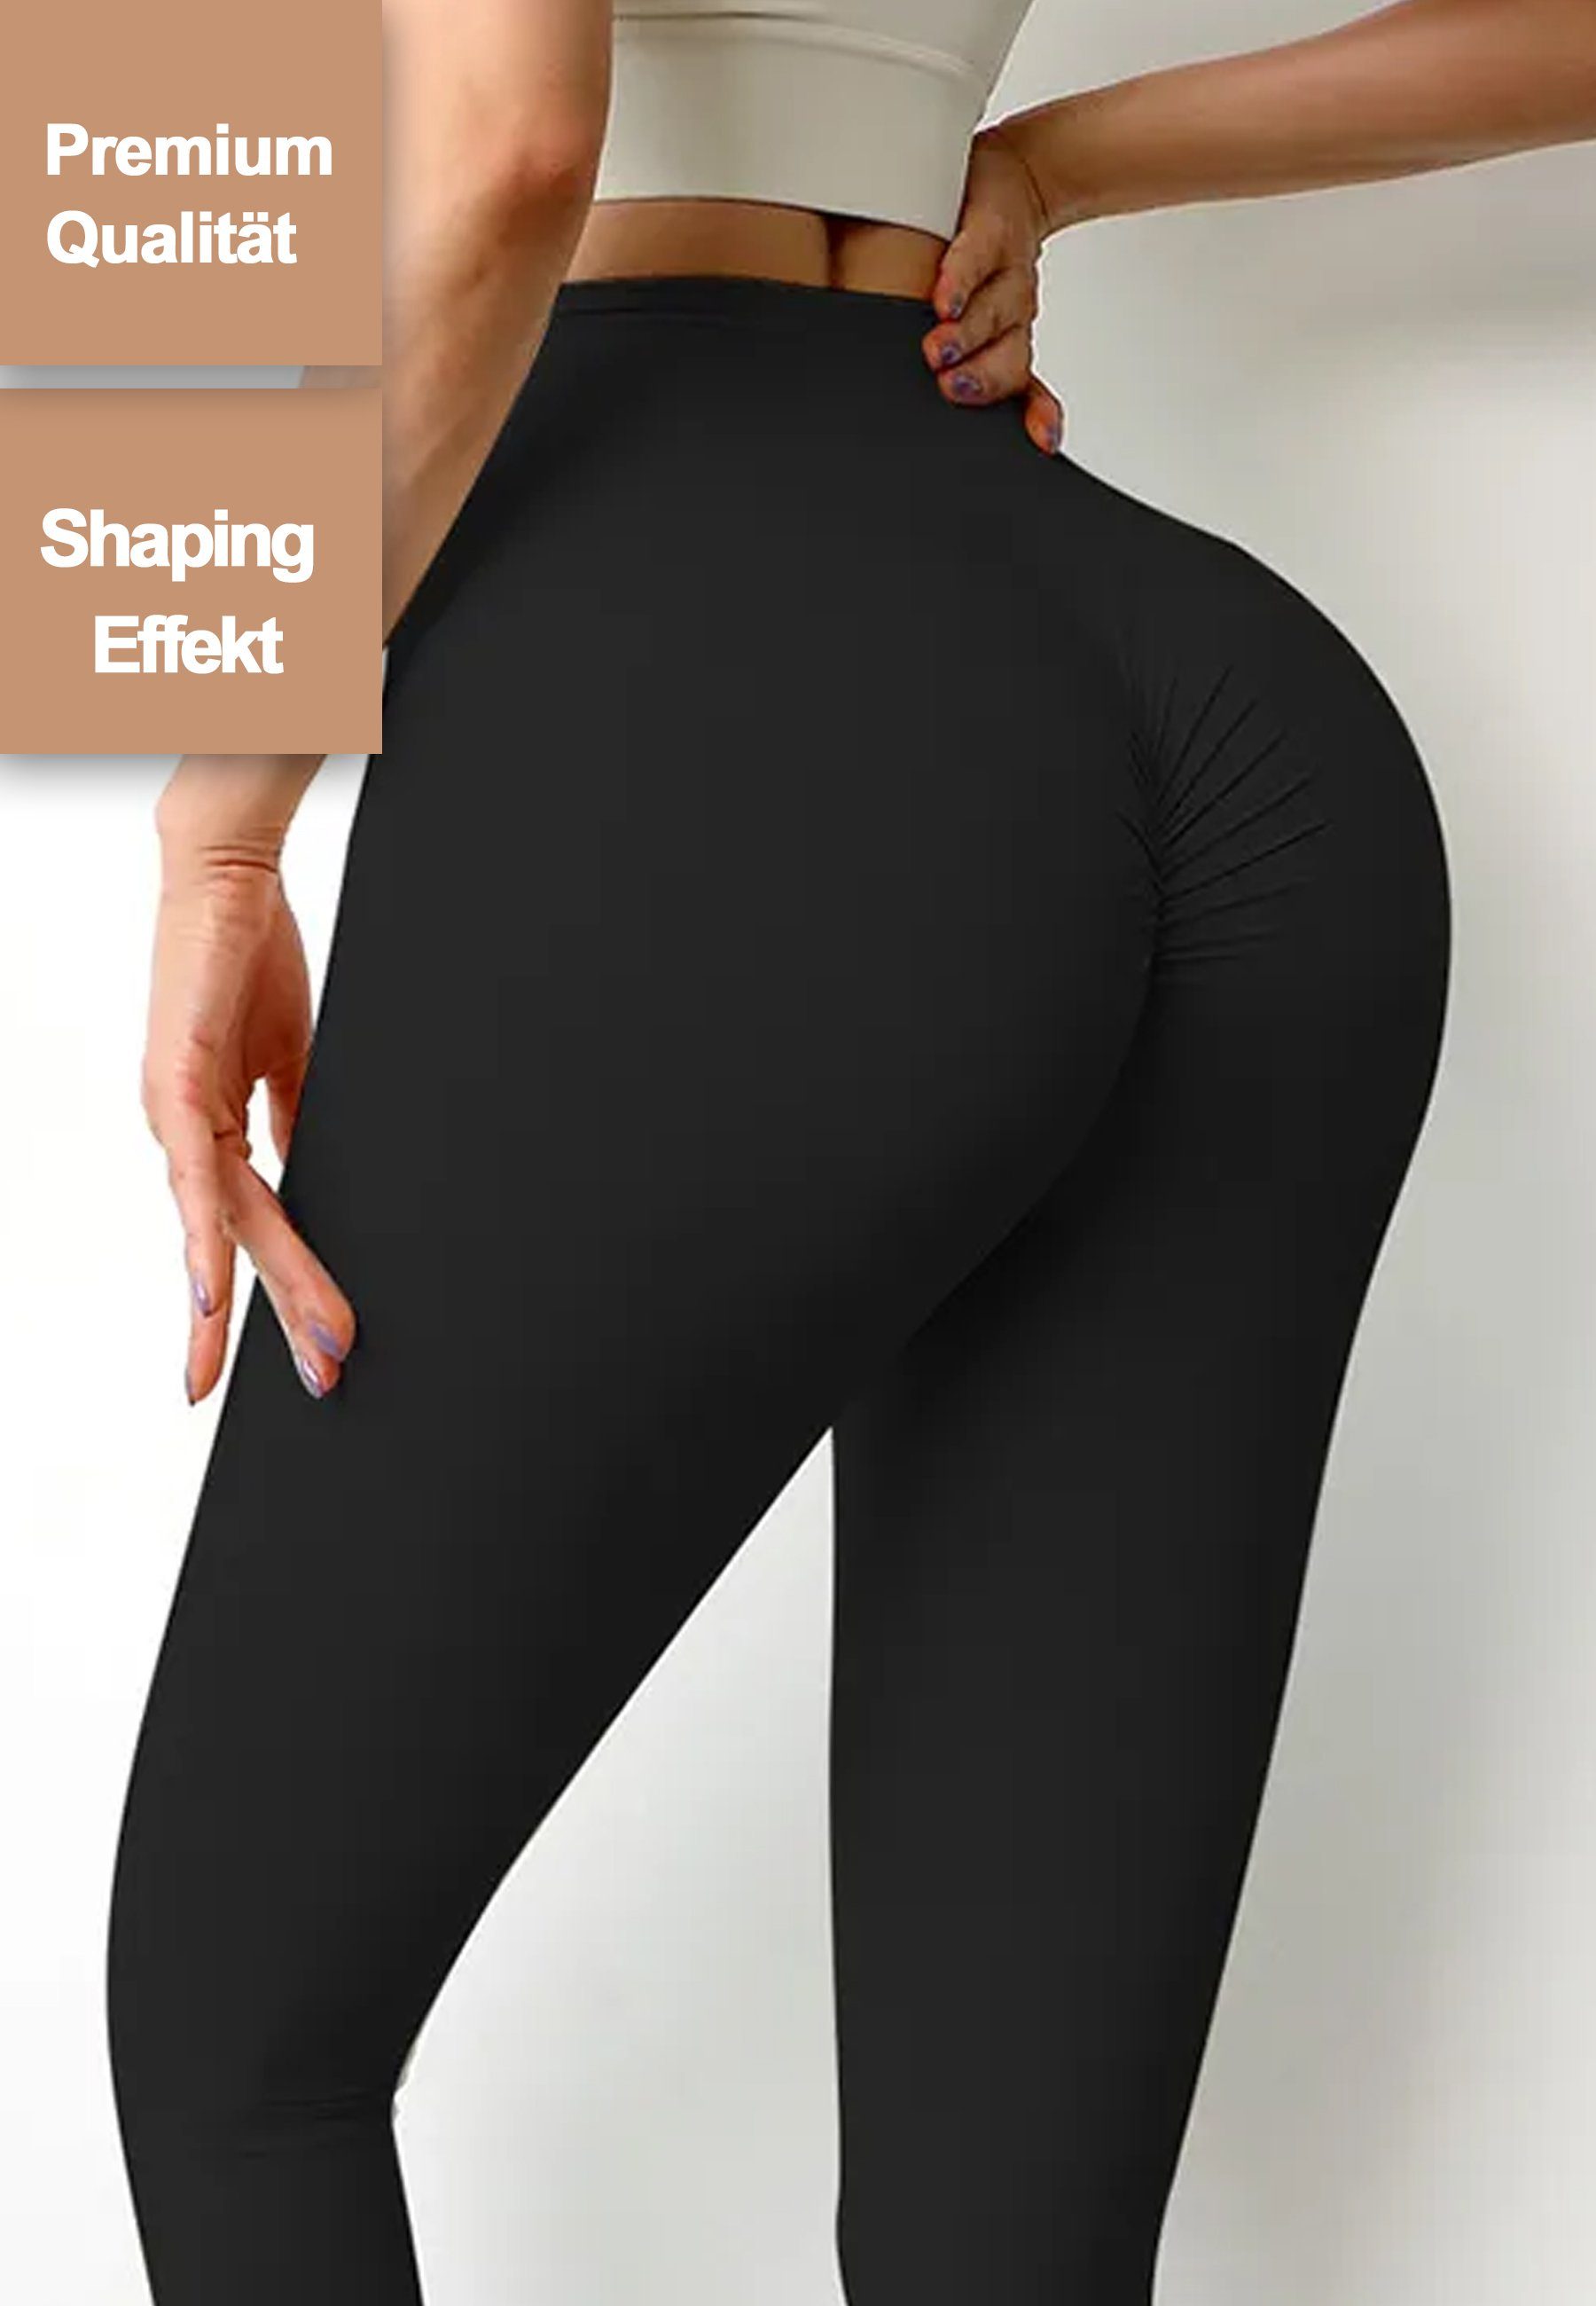 #1 Topseller Leggings Shaping Effekt für einen knackigen & sexy Po Schwarz | Leggings